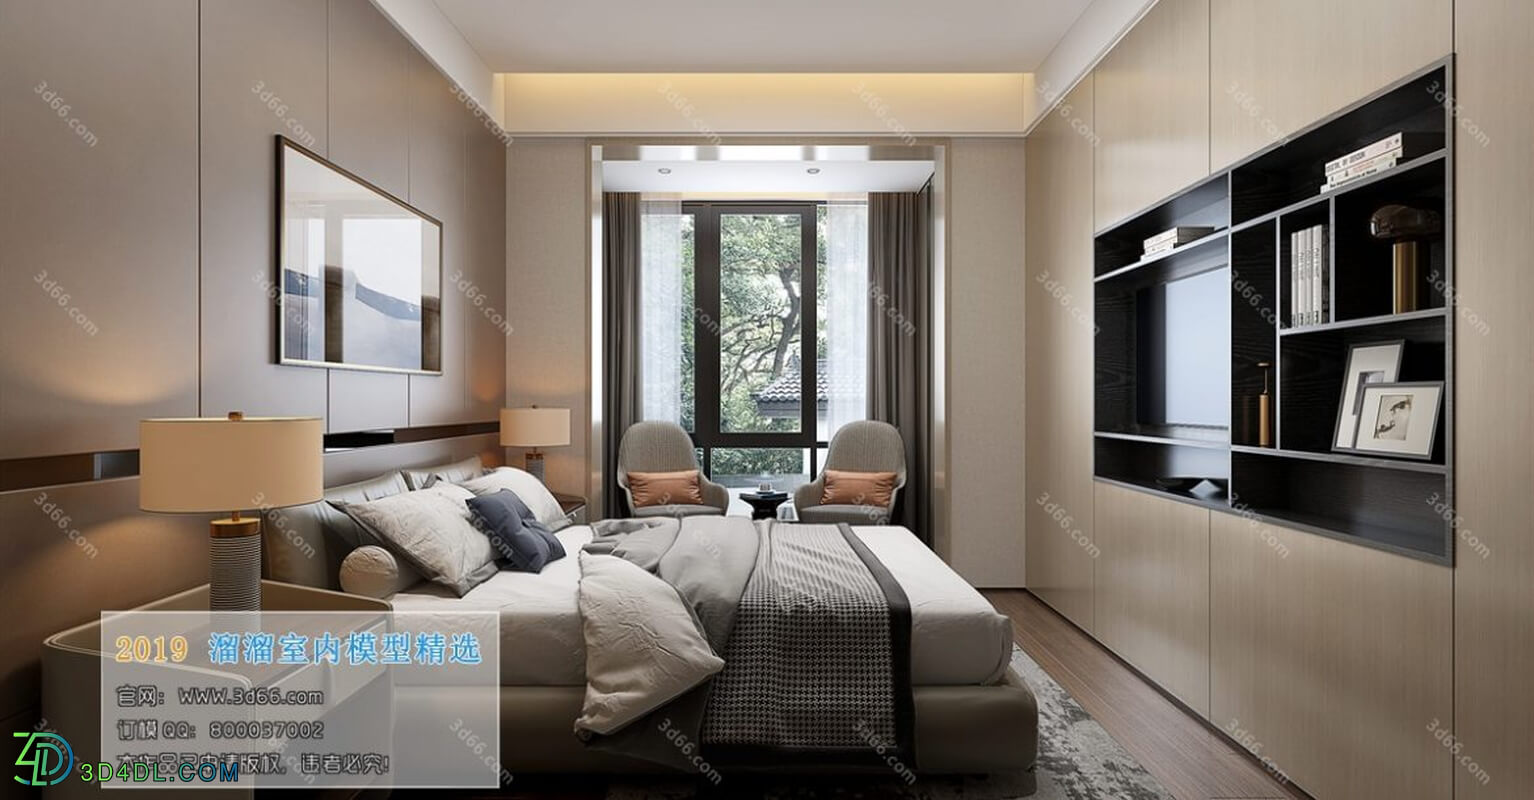 3D66 2019 Bedroom Modern style (004)